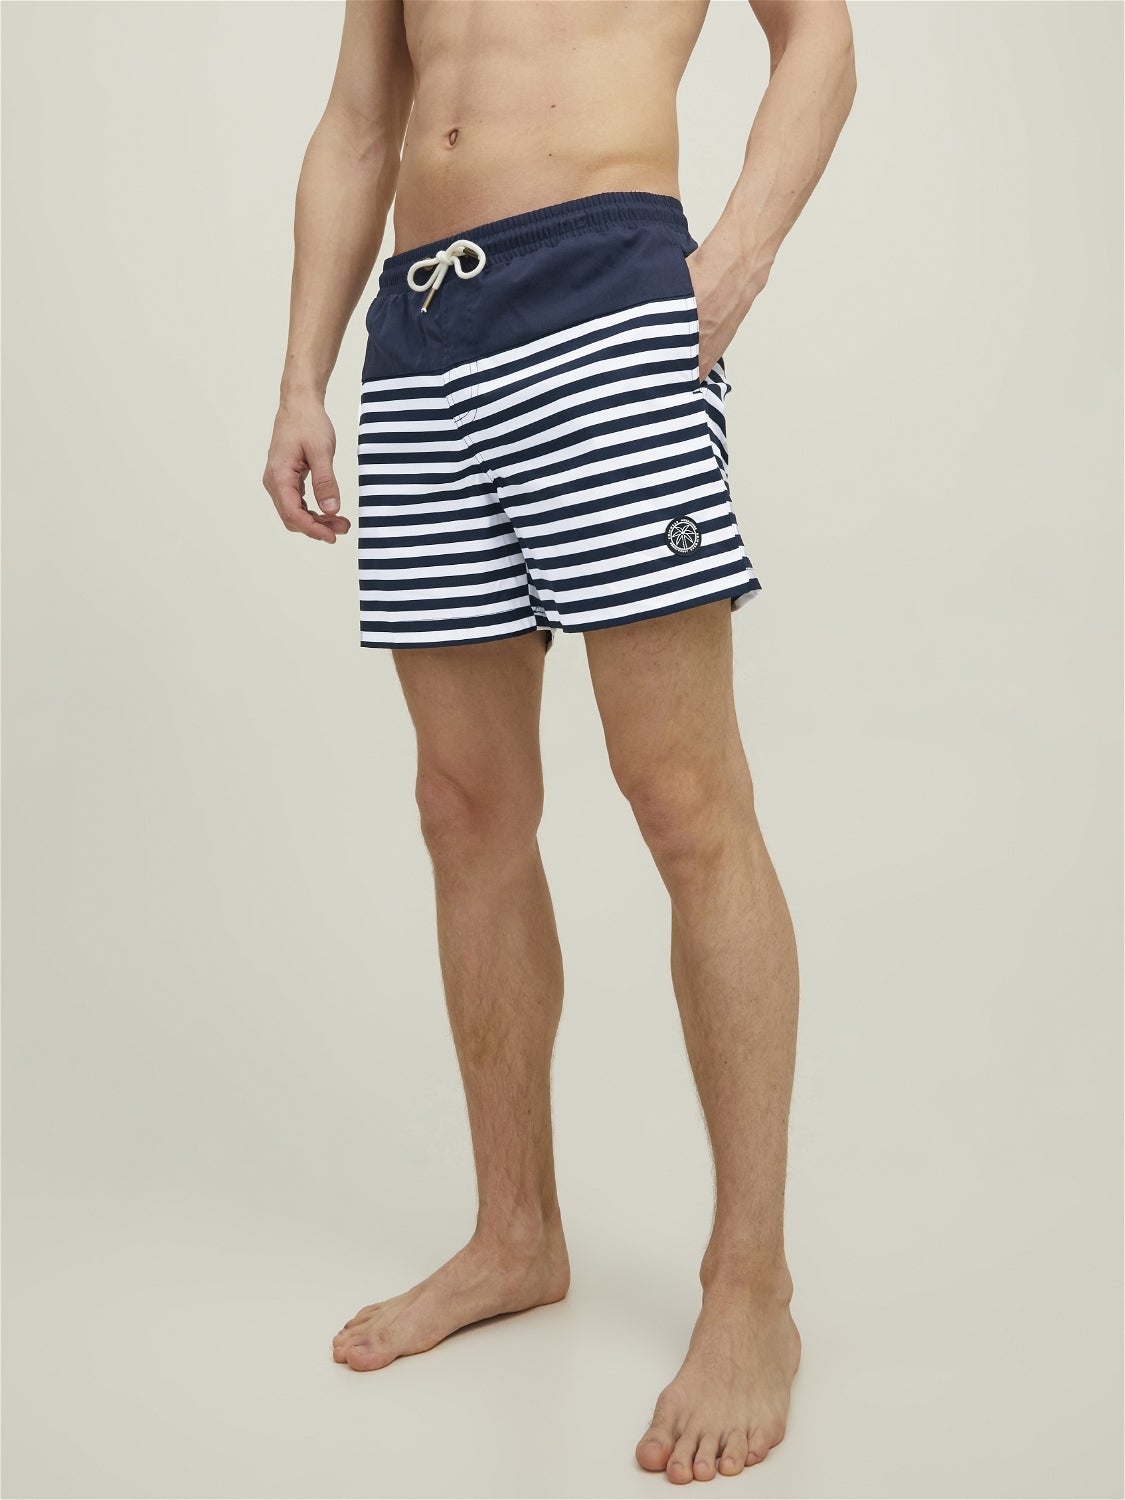 Jack & Jones swimsuit Black/White M discount 73% MEN FASHION Swimwear 